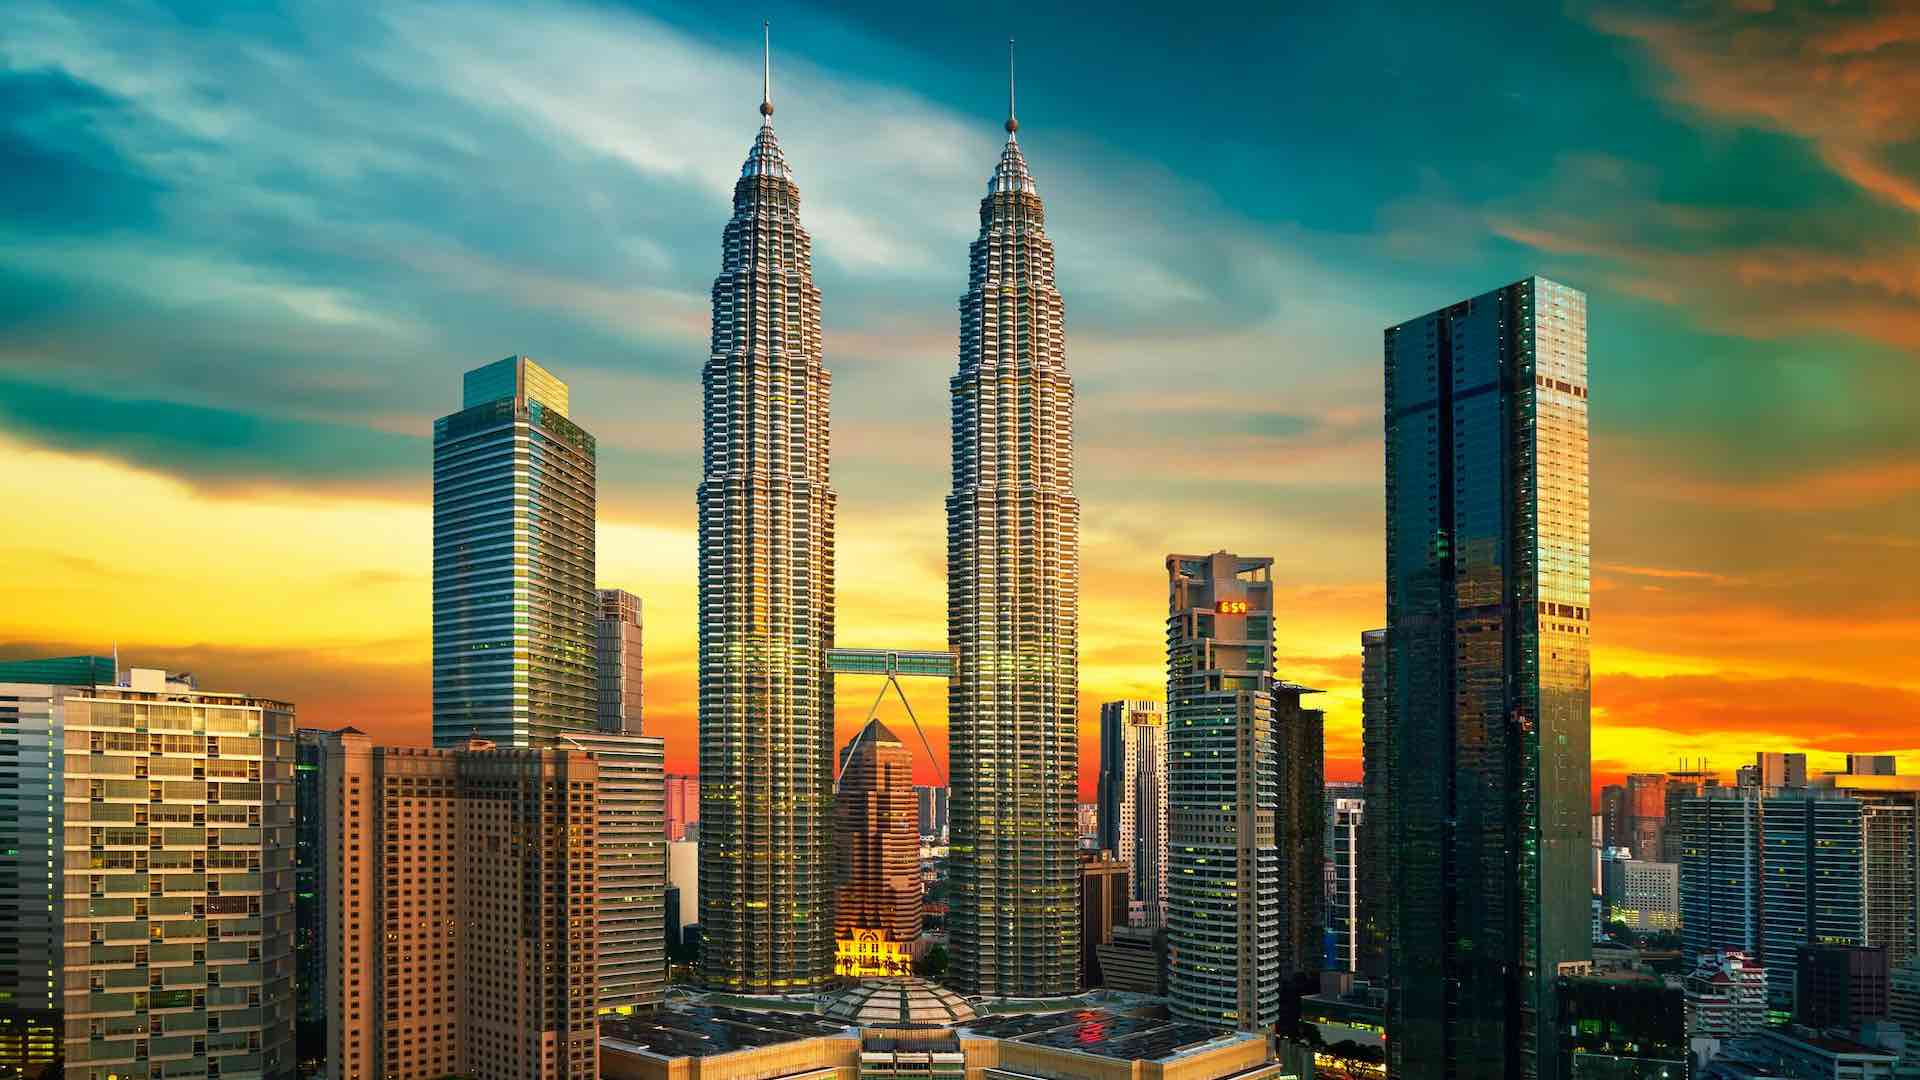 Exploring more of Kuala Lumpur as Etihad Airways ramps up flight frequency